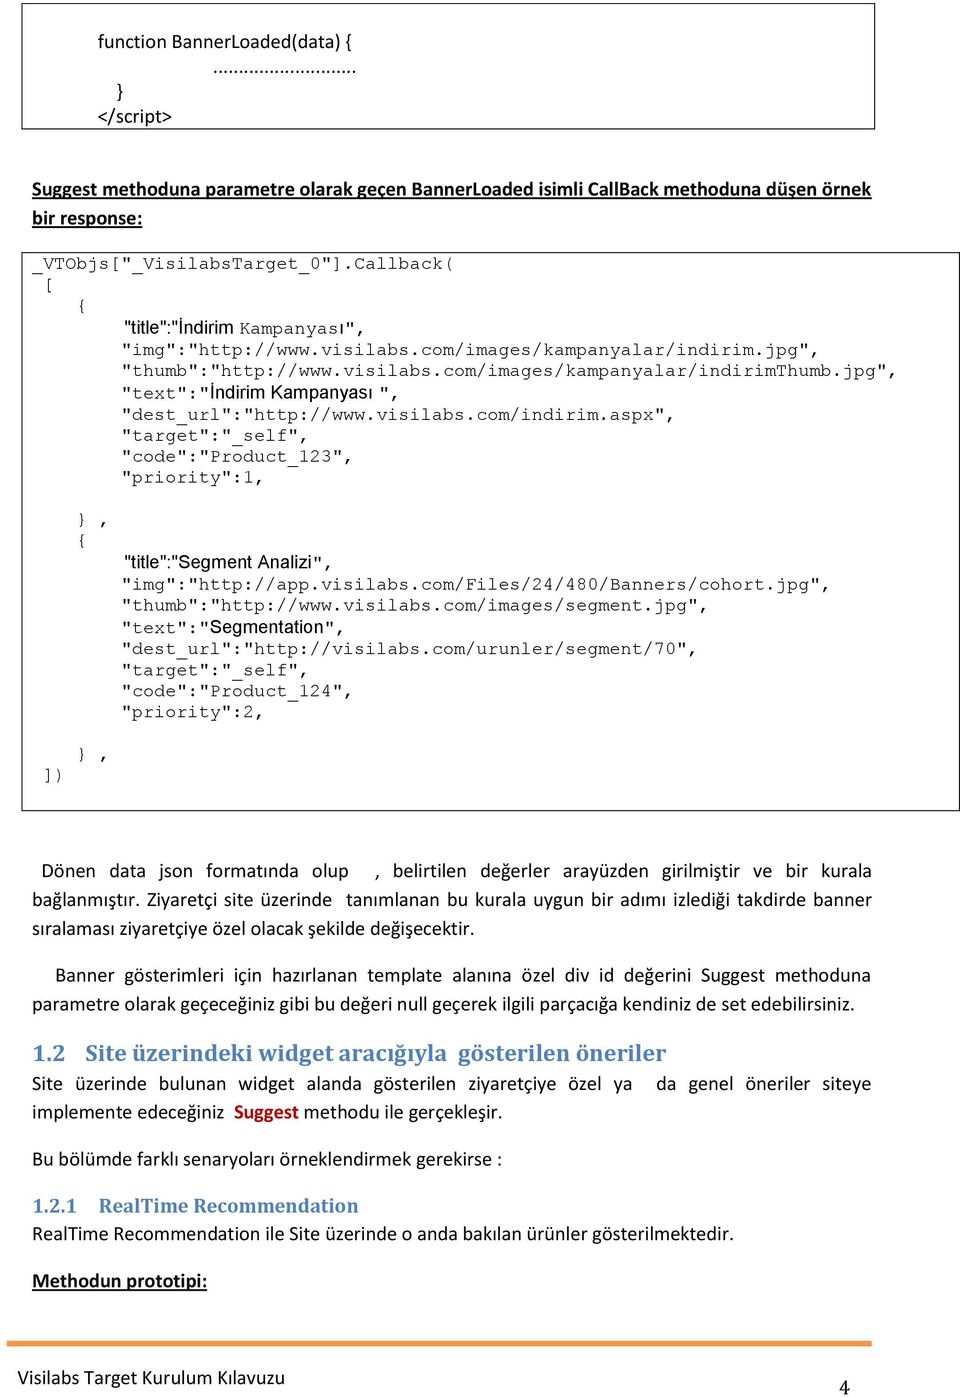 jpg", "text":"indirim Kampanyası ", "dest_url":"http://www.visilabs.com/indirim.aspx", "target":"_self", "code":"product_123", "priority":1,, "title":"segment Analizi", "img":"http://app.visilabs.com/files/24/480/banners/cohort.